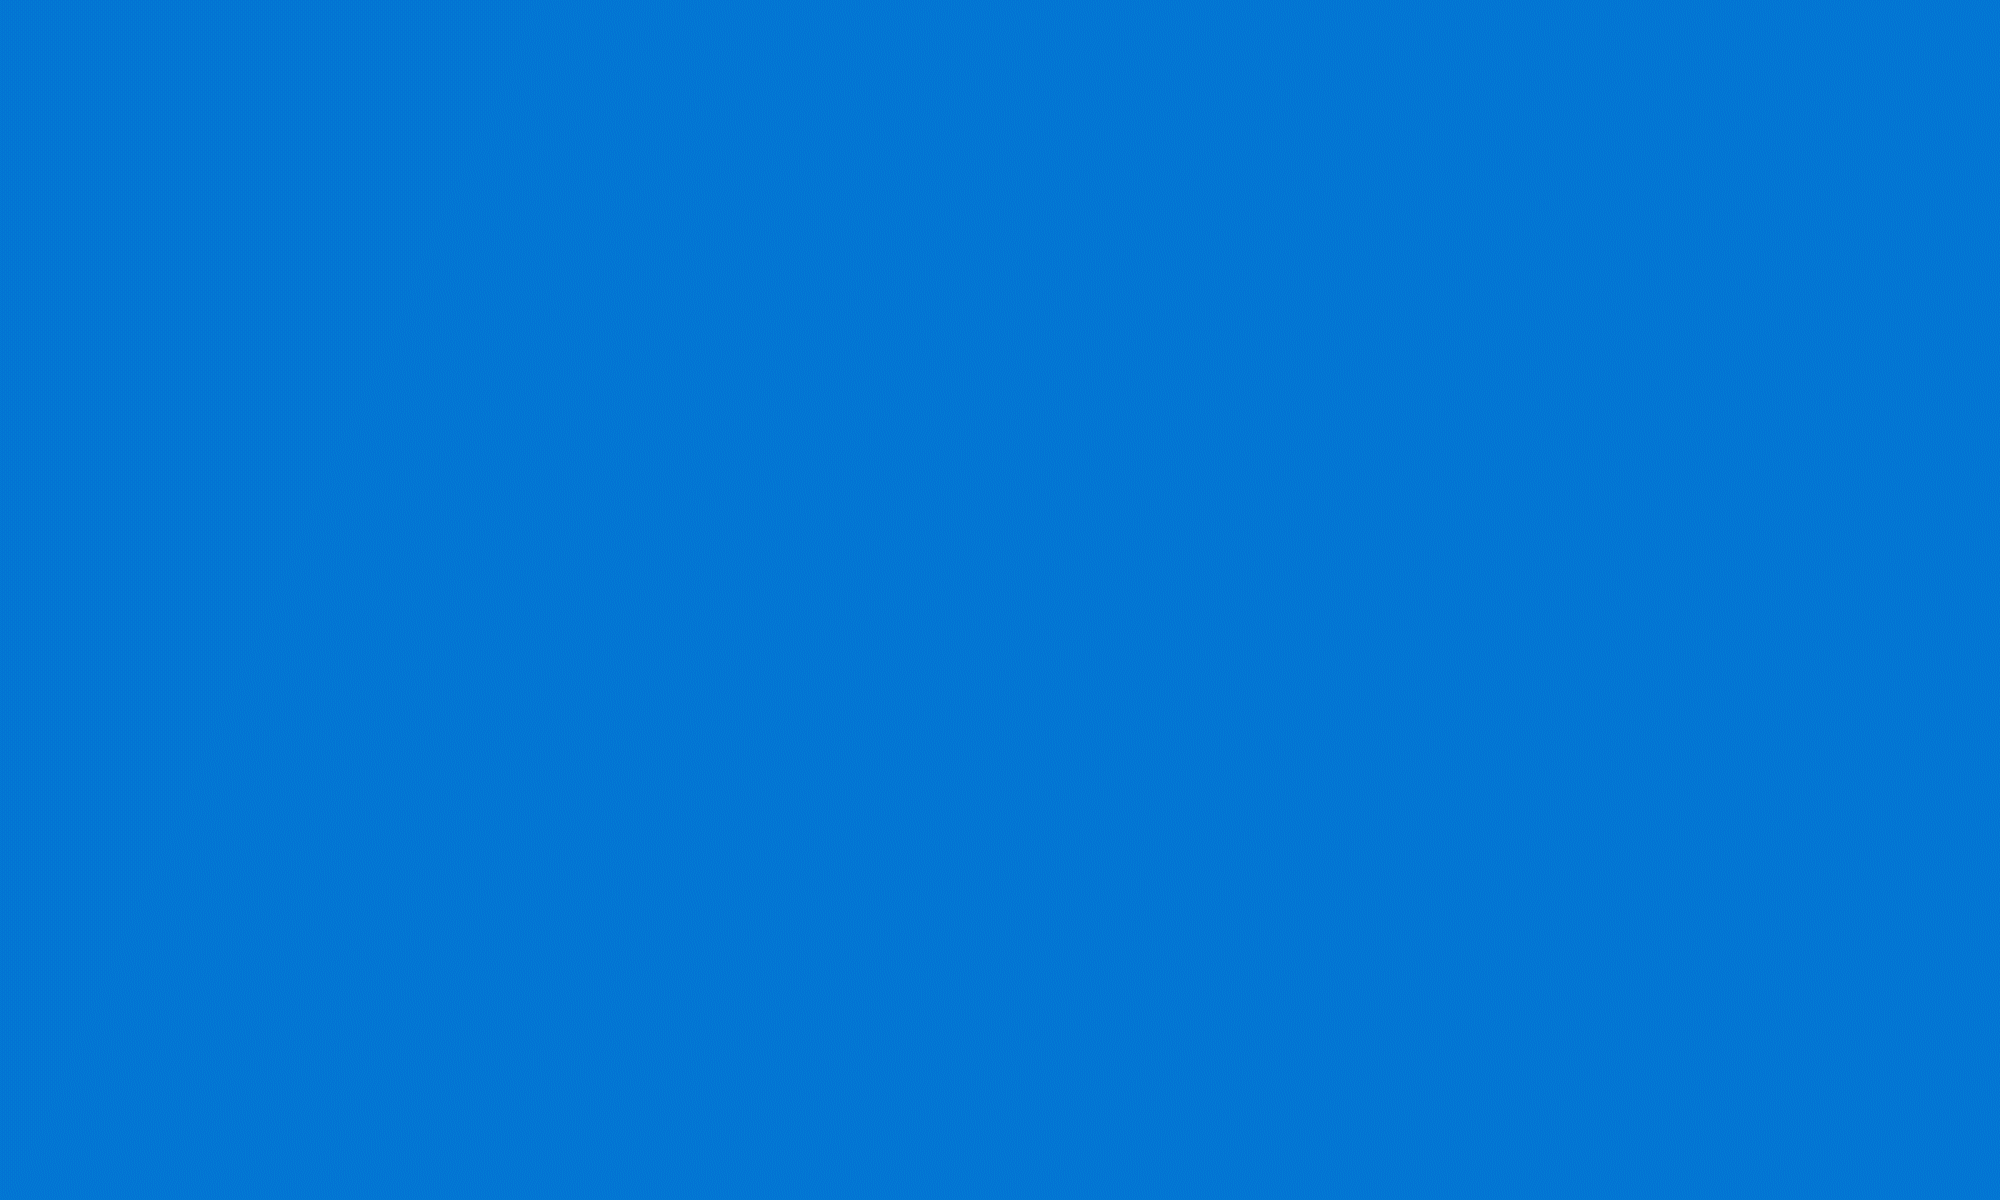 Outlook logo loading animation on blue background